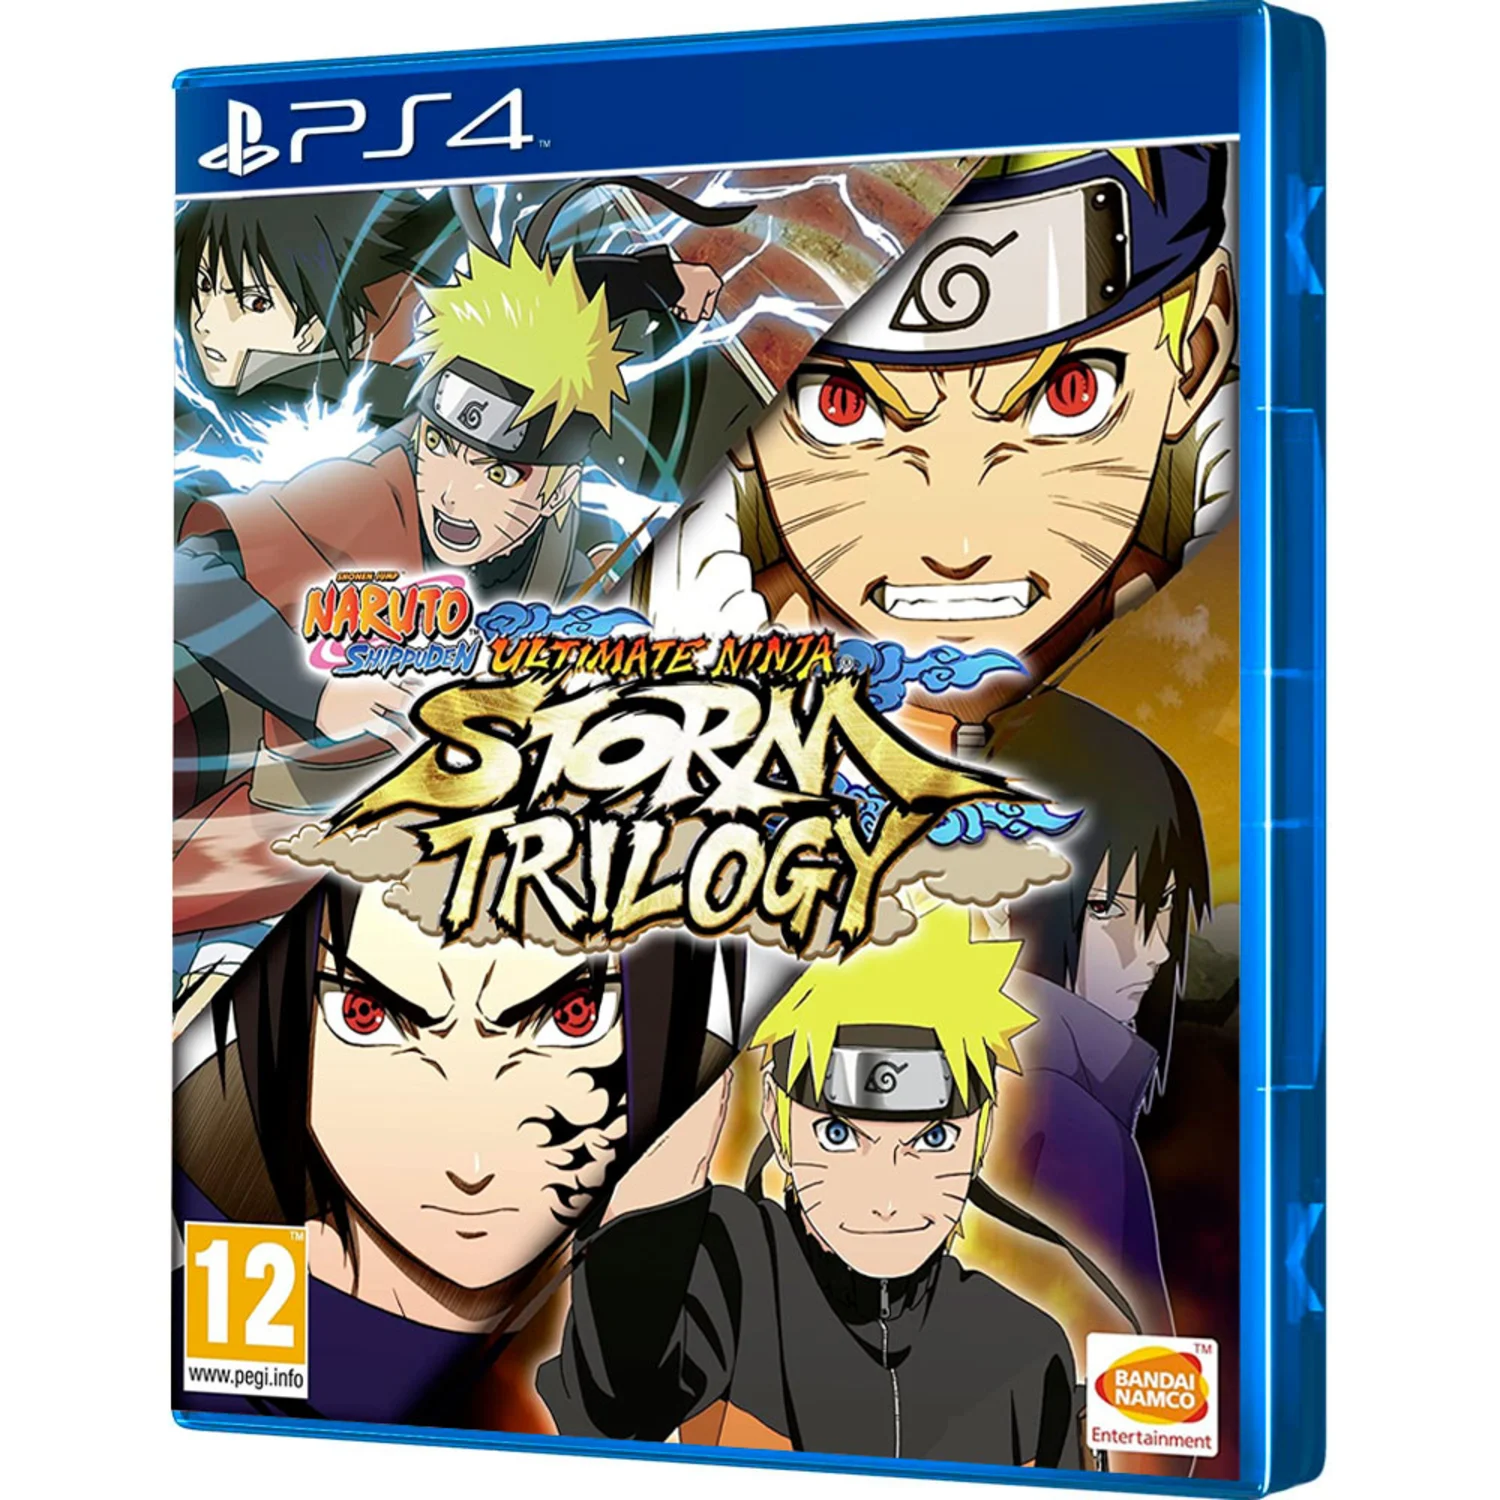 Jogo Naruto Shipudden Ultima Ninja Storm Trilogy PS4